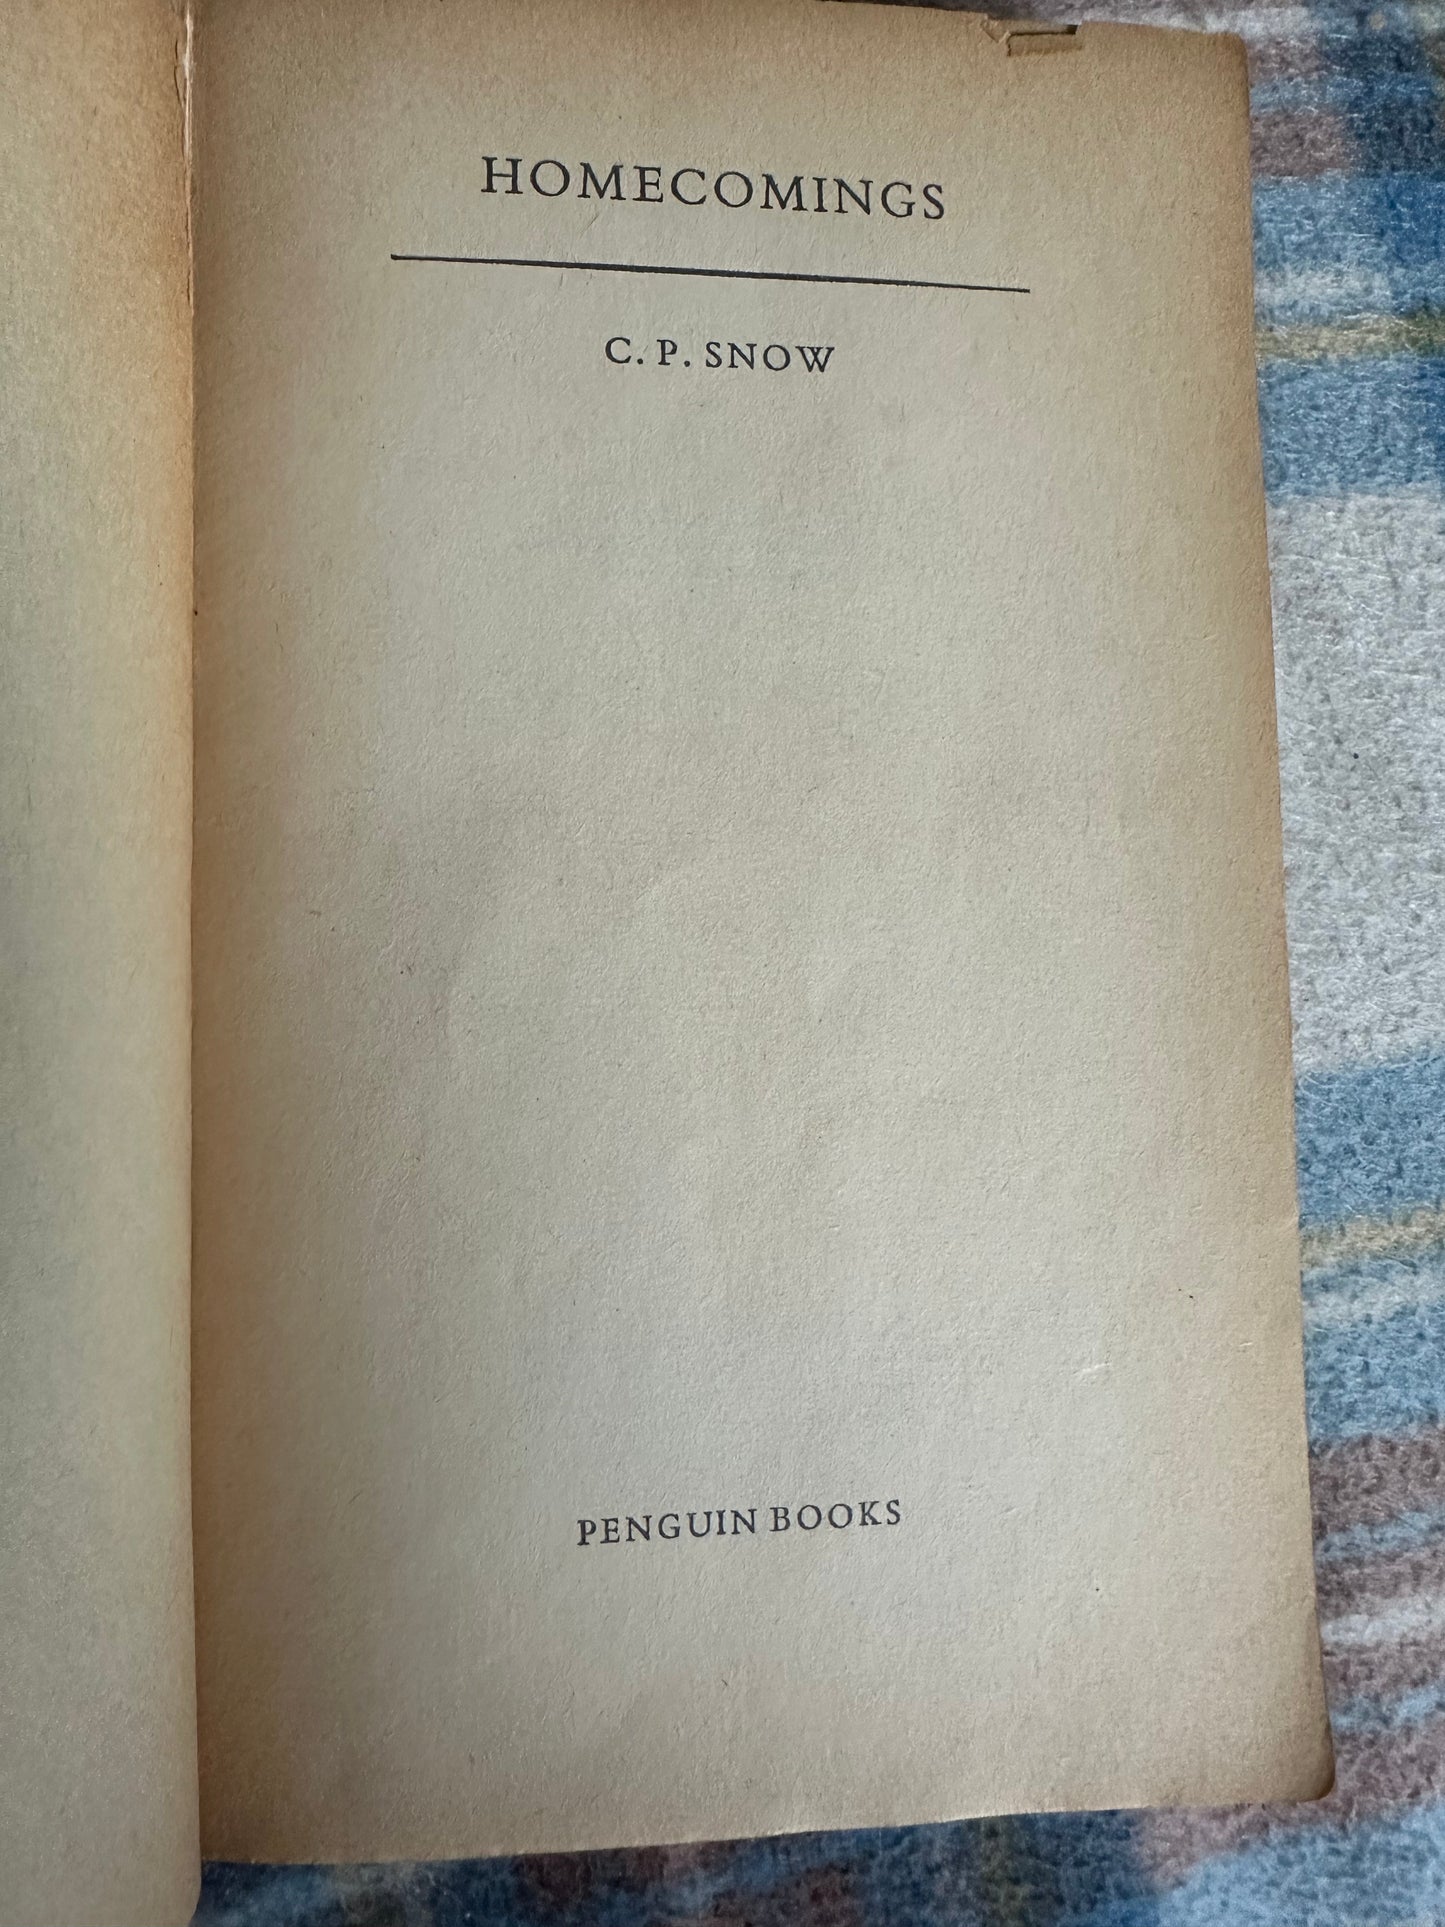 1963 Homecomings - C. P. Snow(Penguin Books)